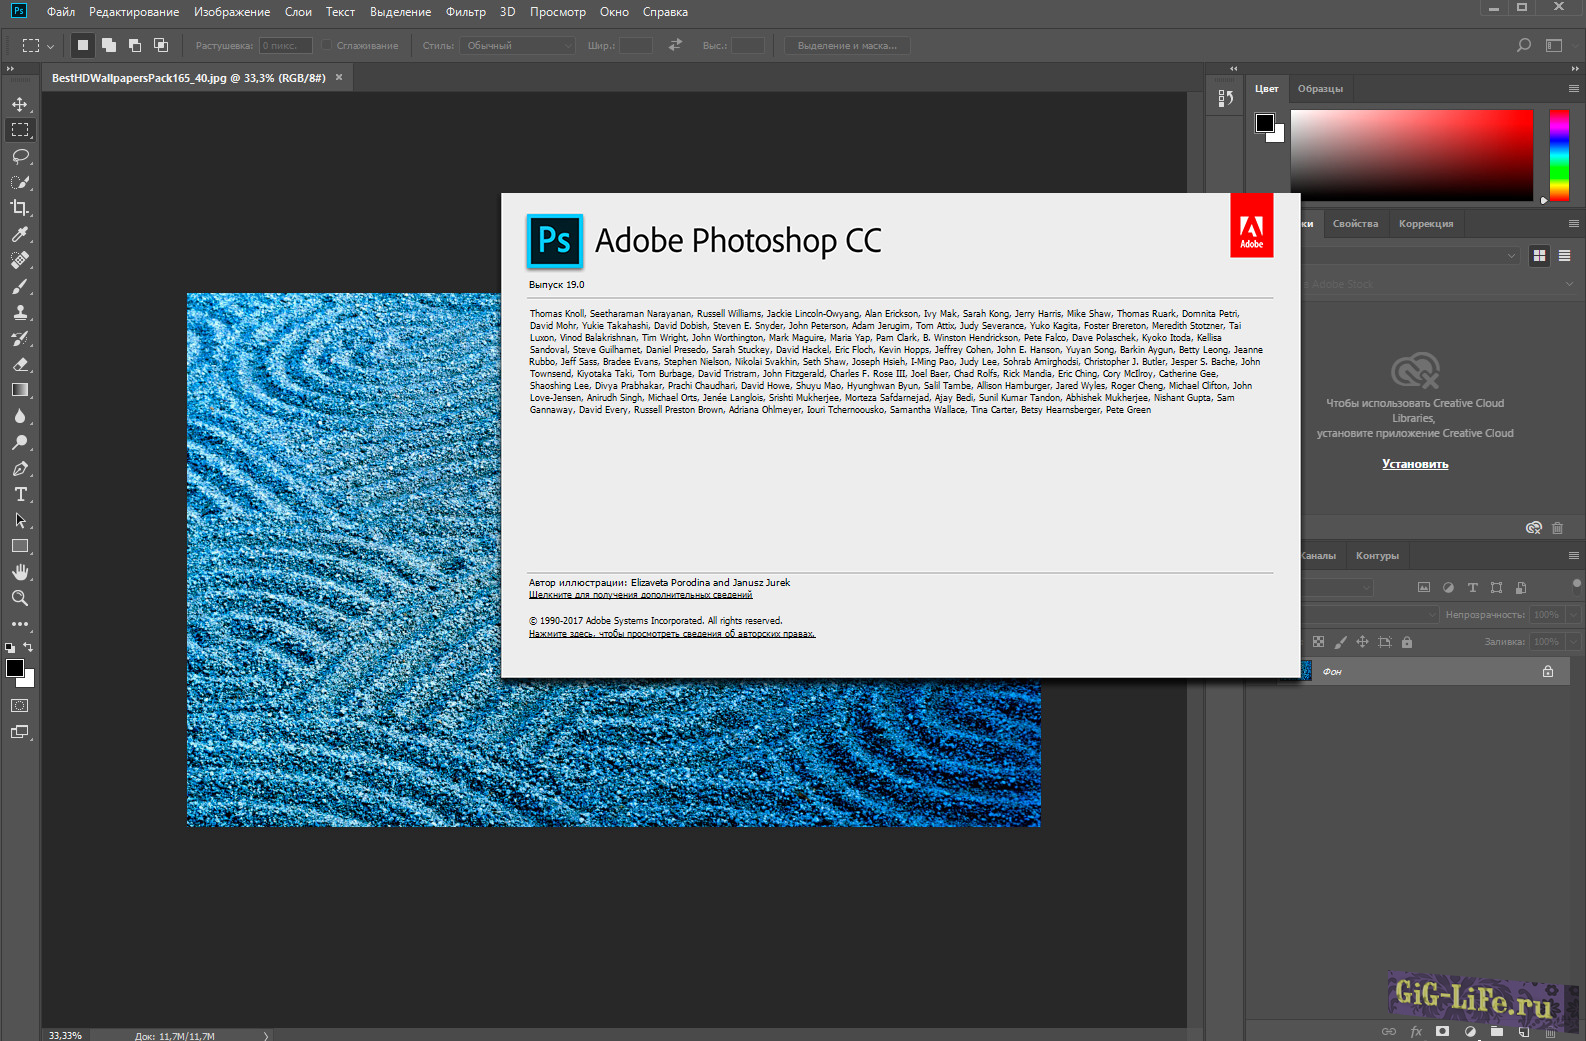 Adobe Photoshop CC 2018 (19.0.1) x86/x64 RePack by D!akov ...